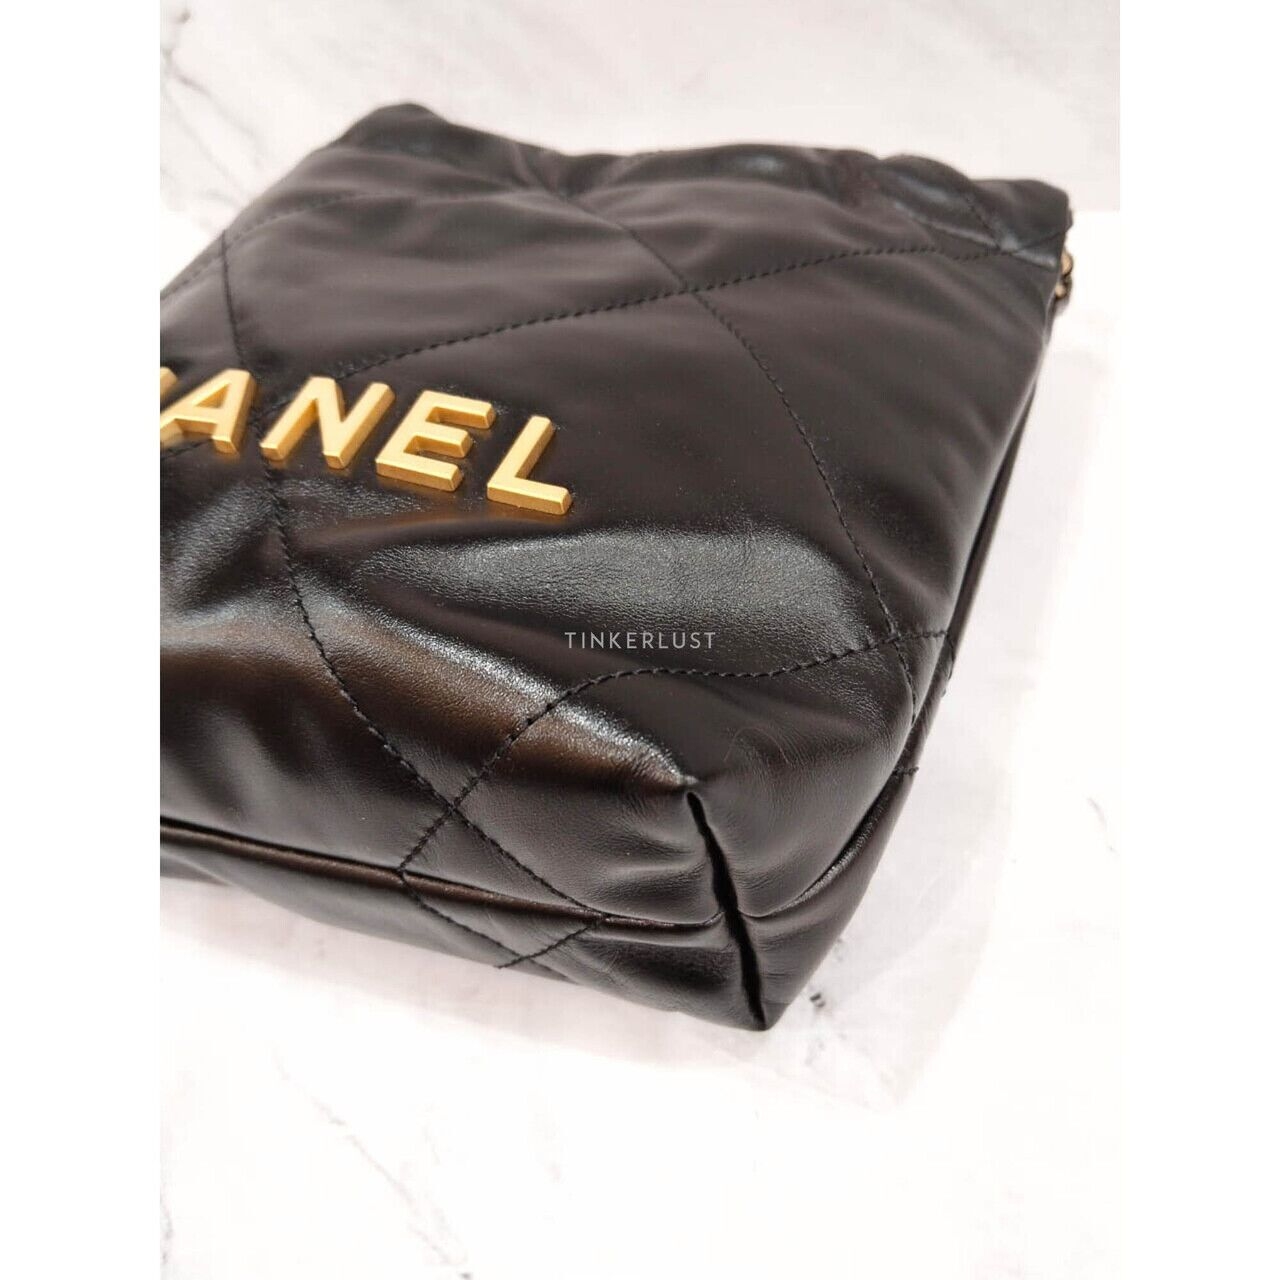 Chanel C22 Mini Black Chip GHW Sling Bag